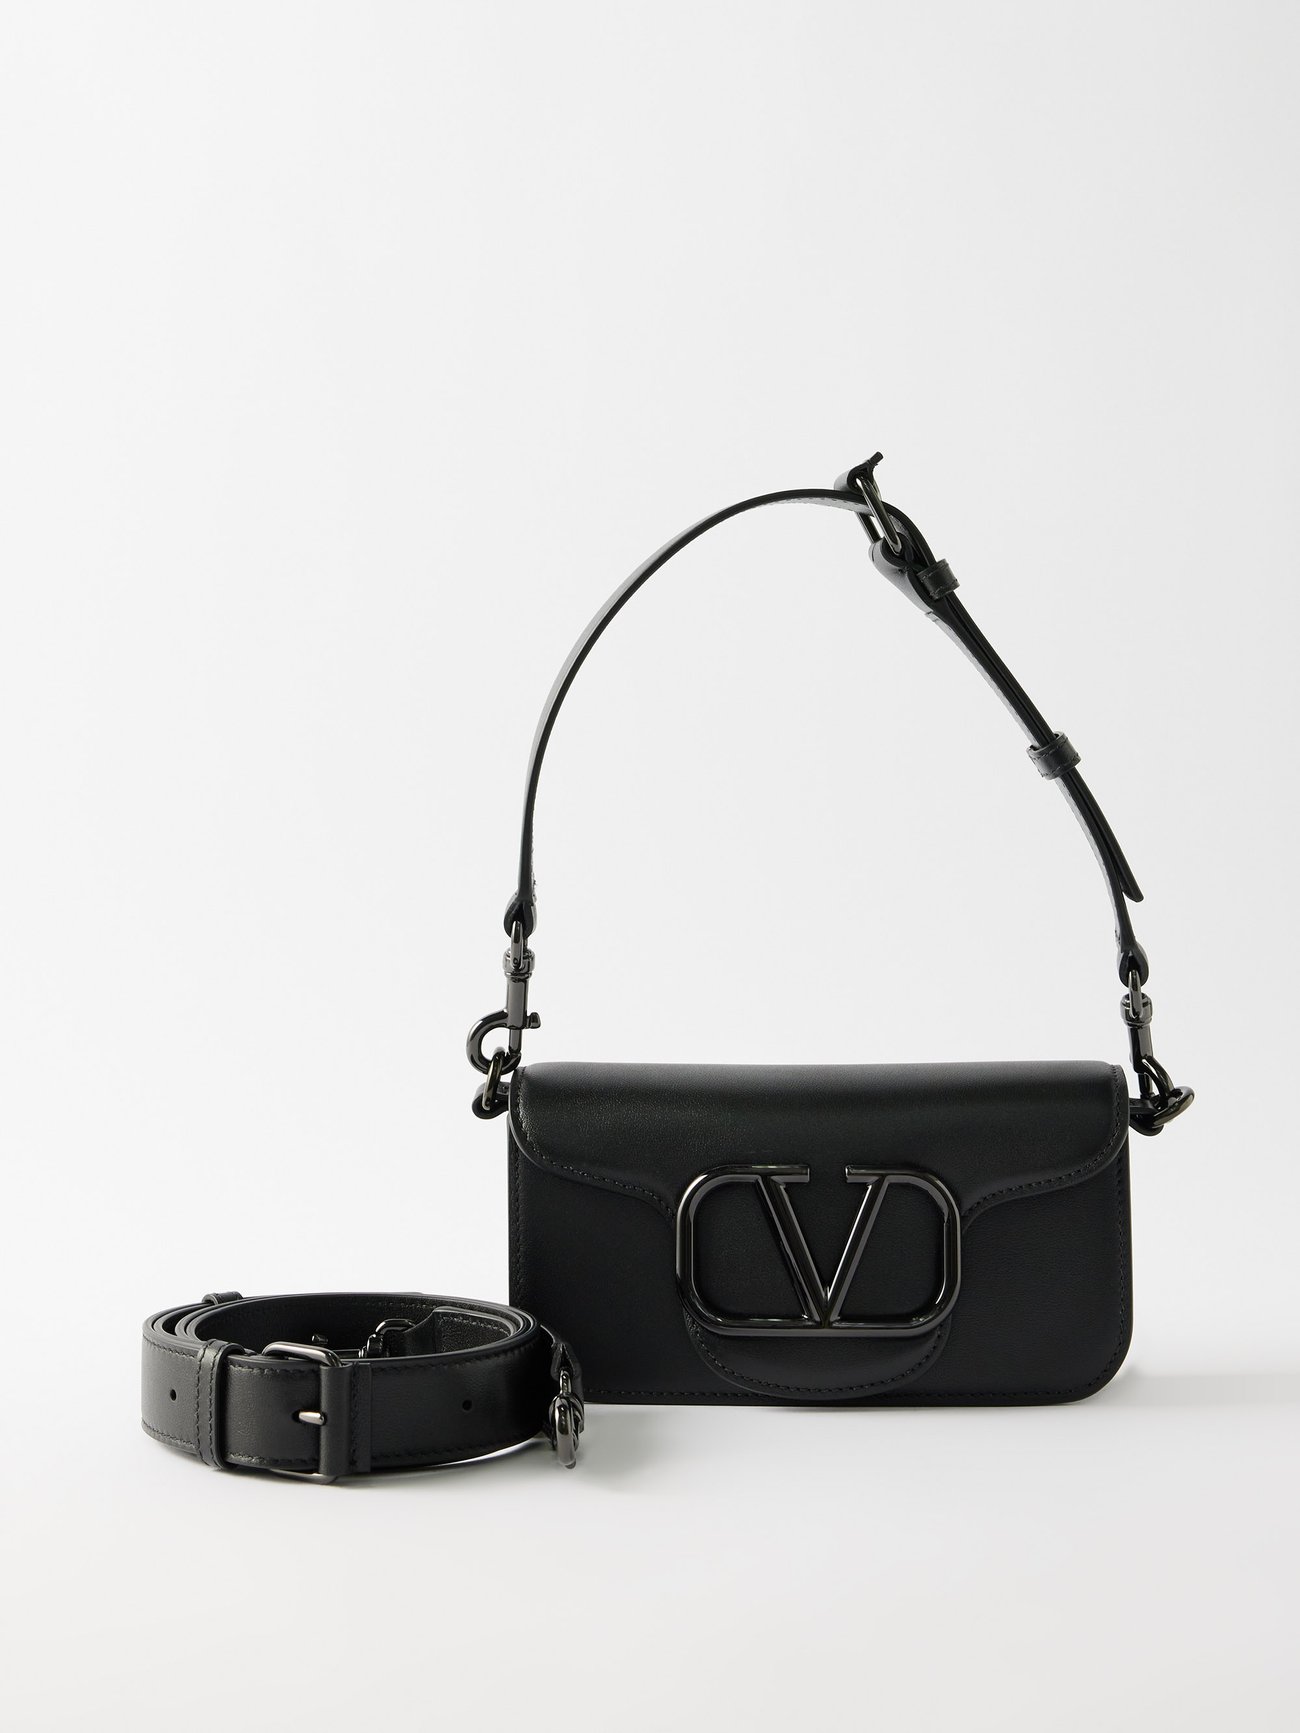 Black Locò mini V-Logo leather shoulder bag, Valentino Garavani